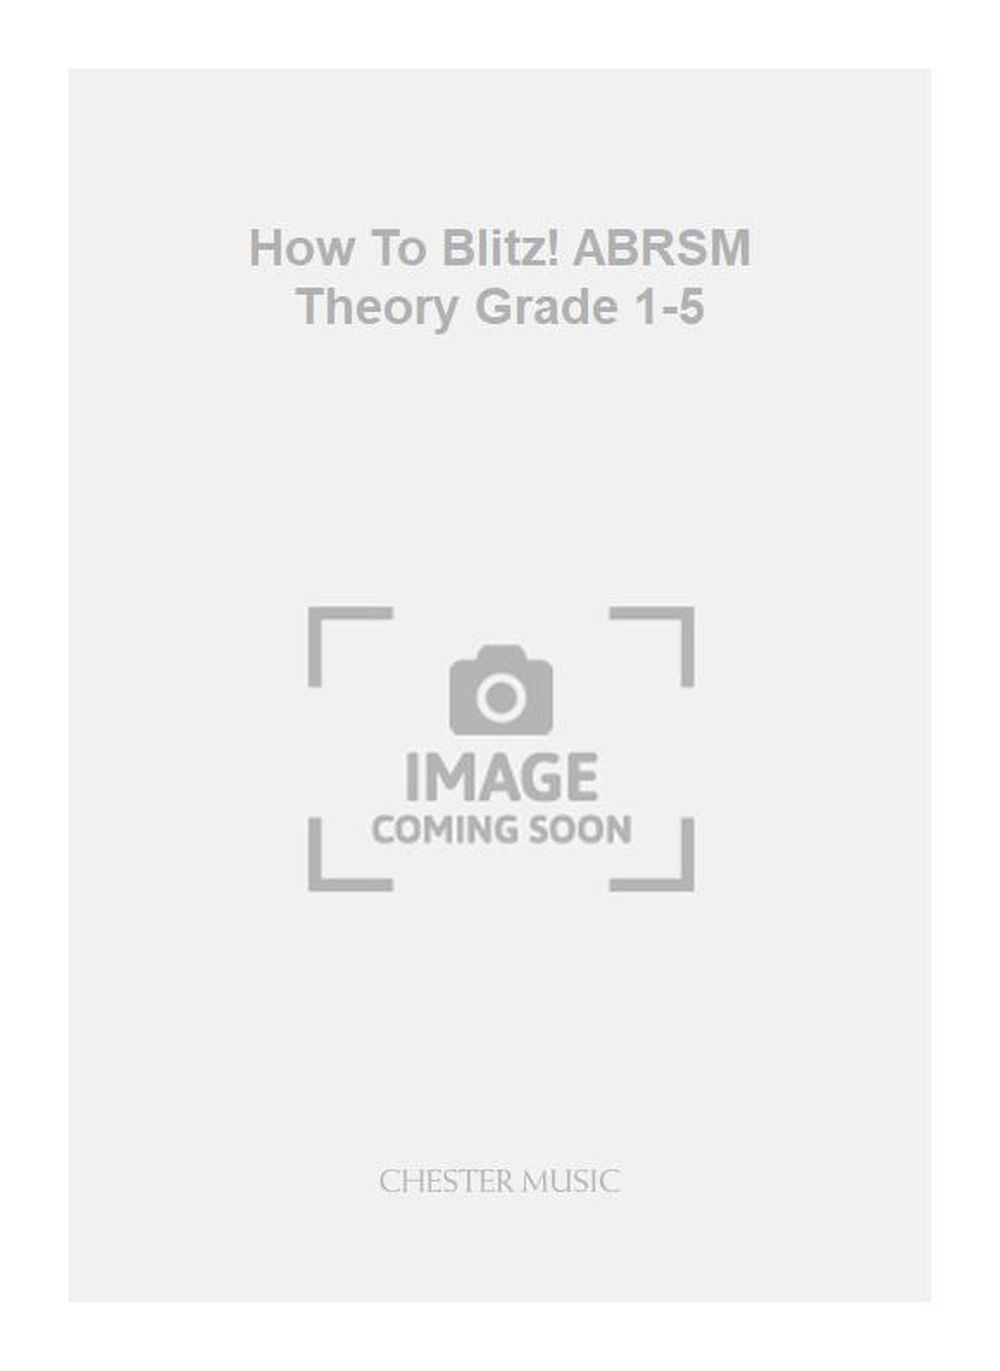 Samantha Coates: How To Blitz! ABRSM Theory Grade 1-5